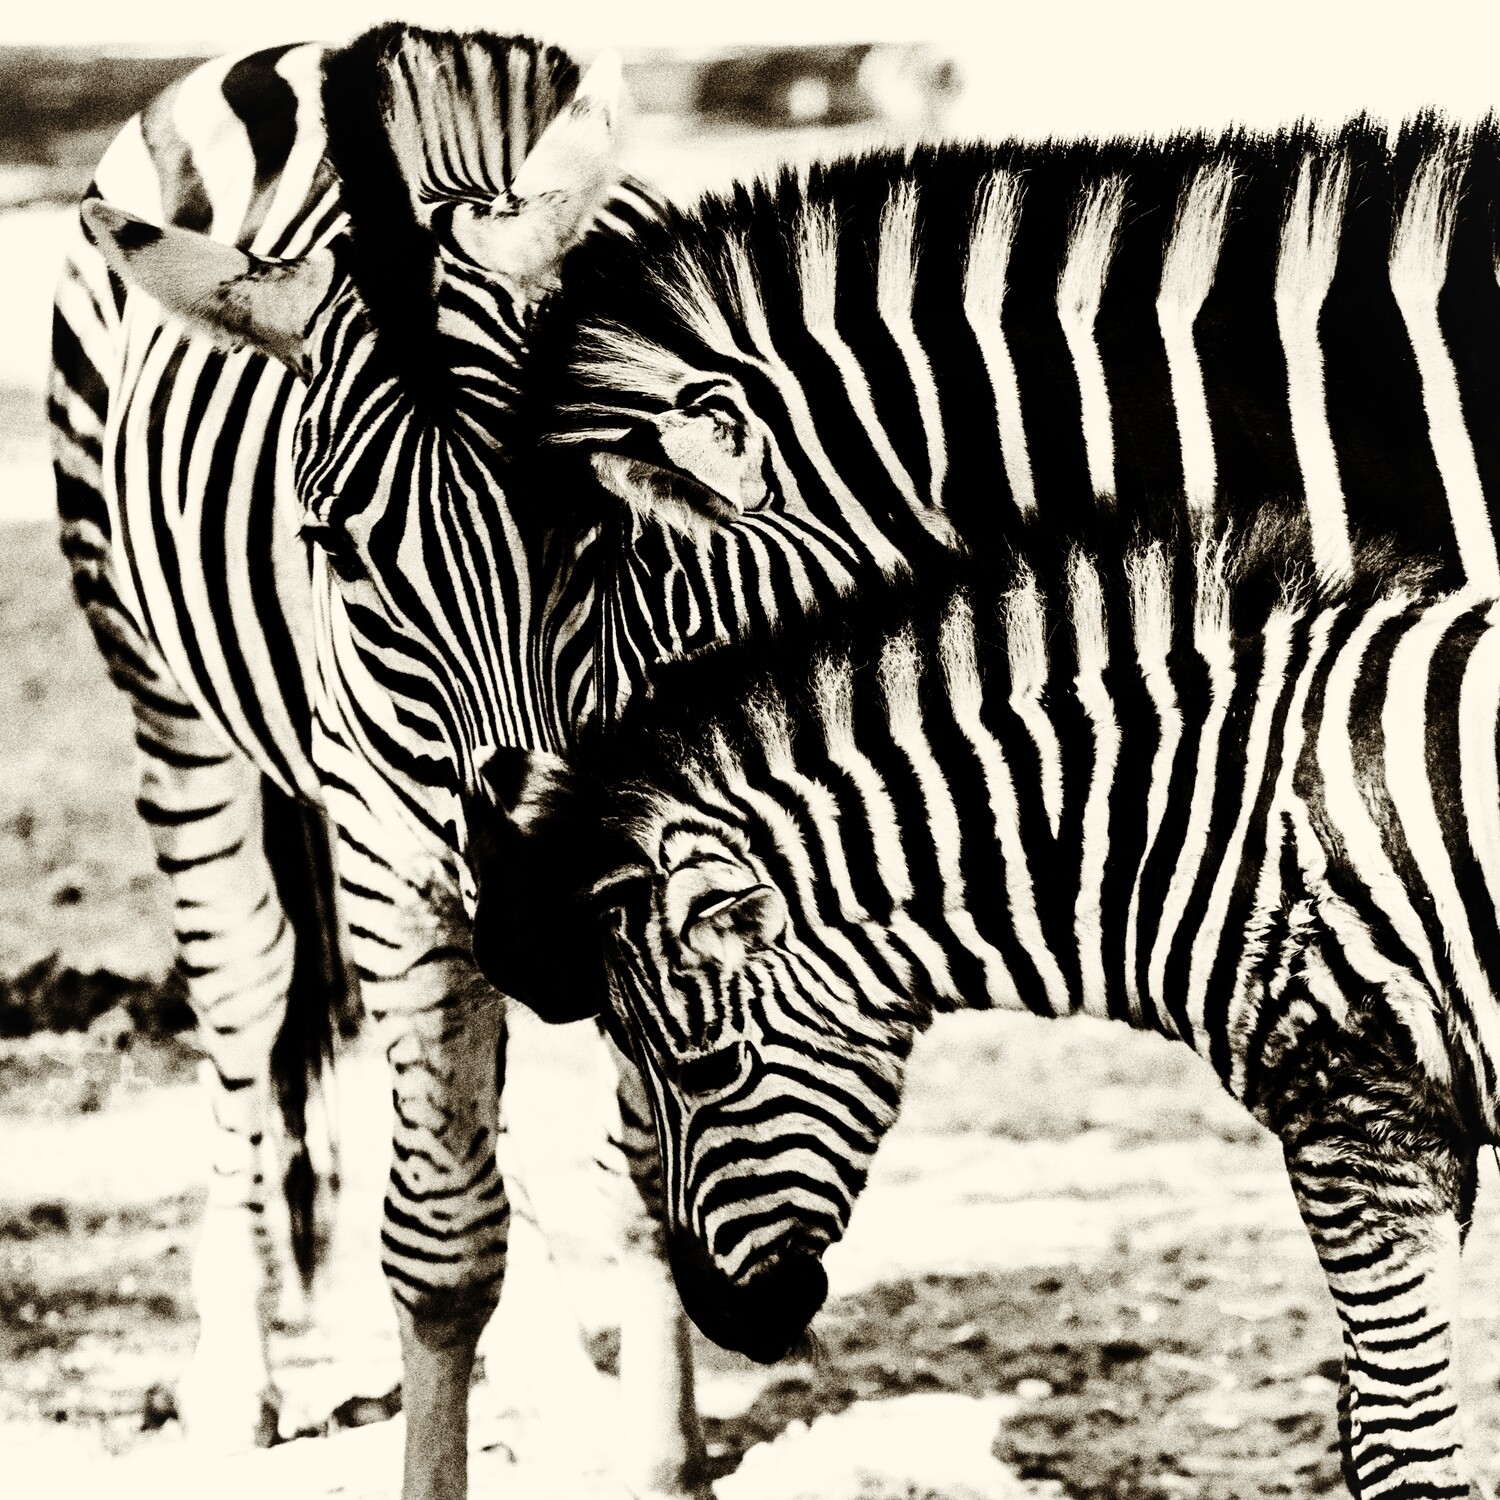 Zebras - Druck auf Leinwand 
60x60 cm